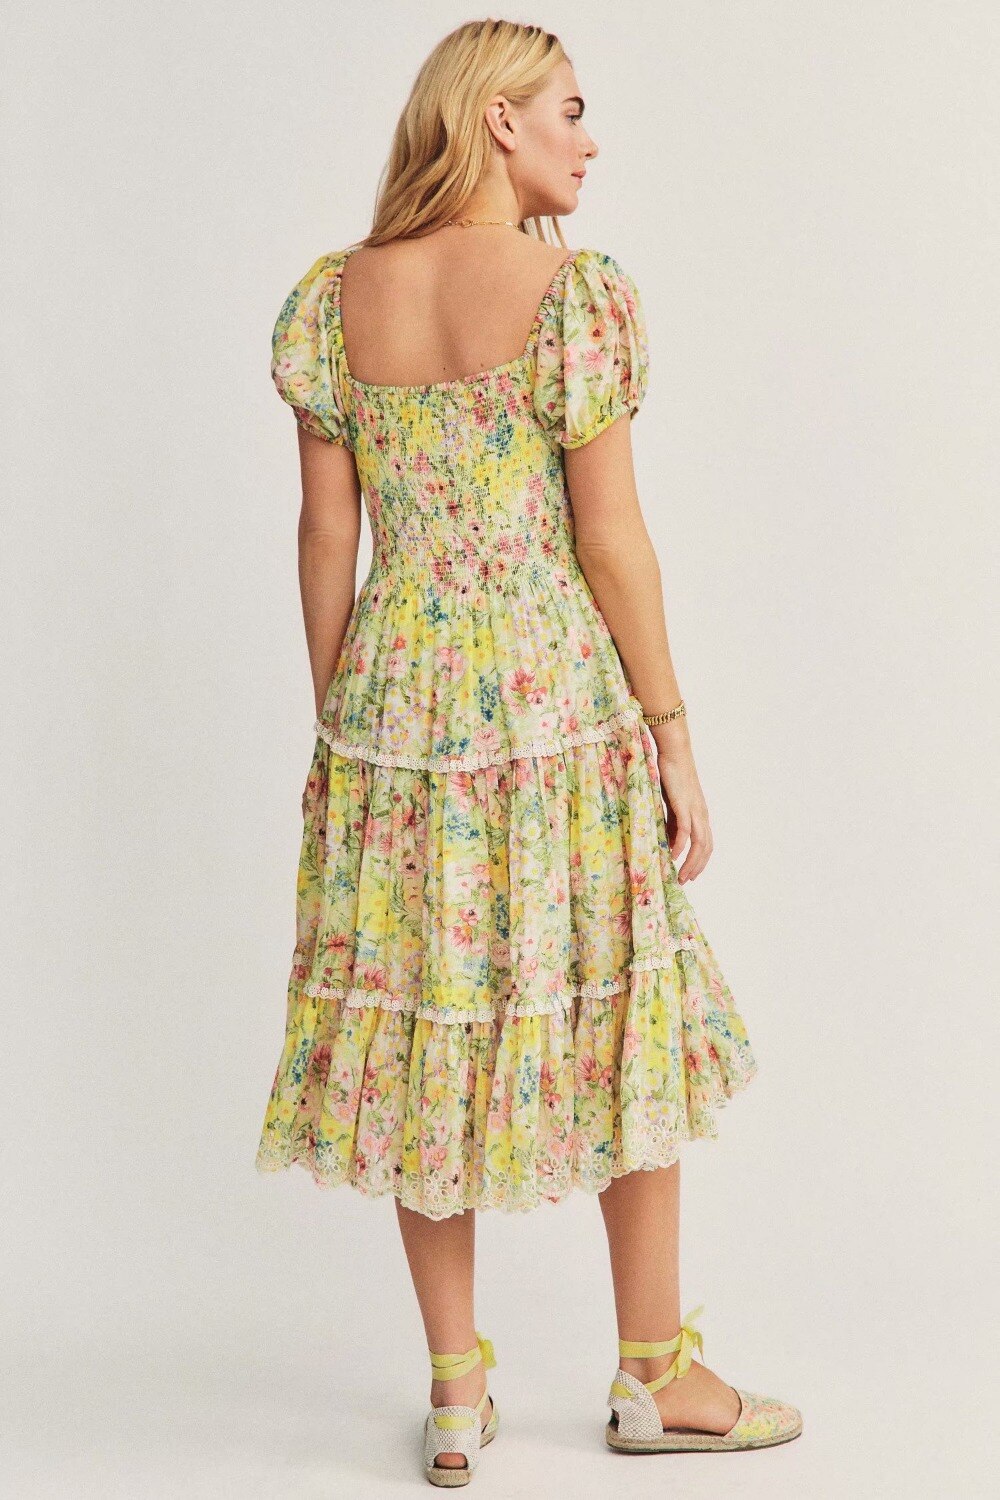 Geumxl 2022 Holiday Elastic Midi Dress Summer Femme Short Sleeve Square Collar A-Line Floral Dress Printing Vestido De Mujer Boho Dress